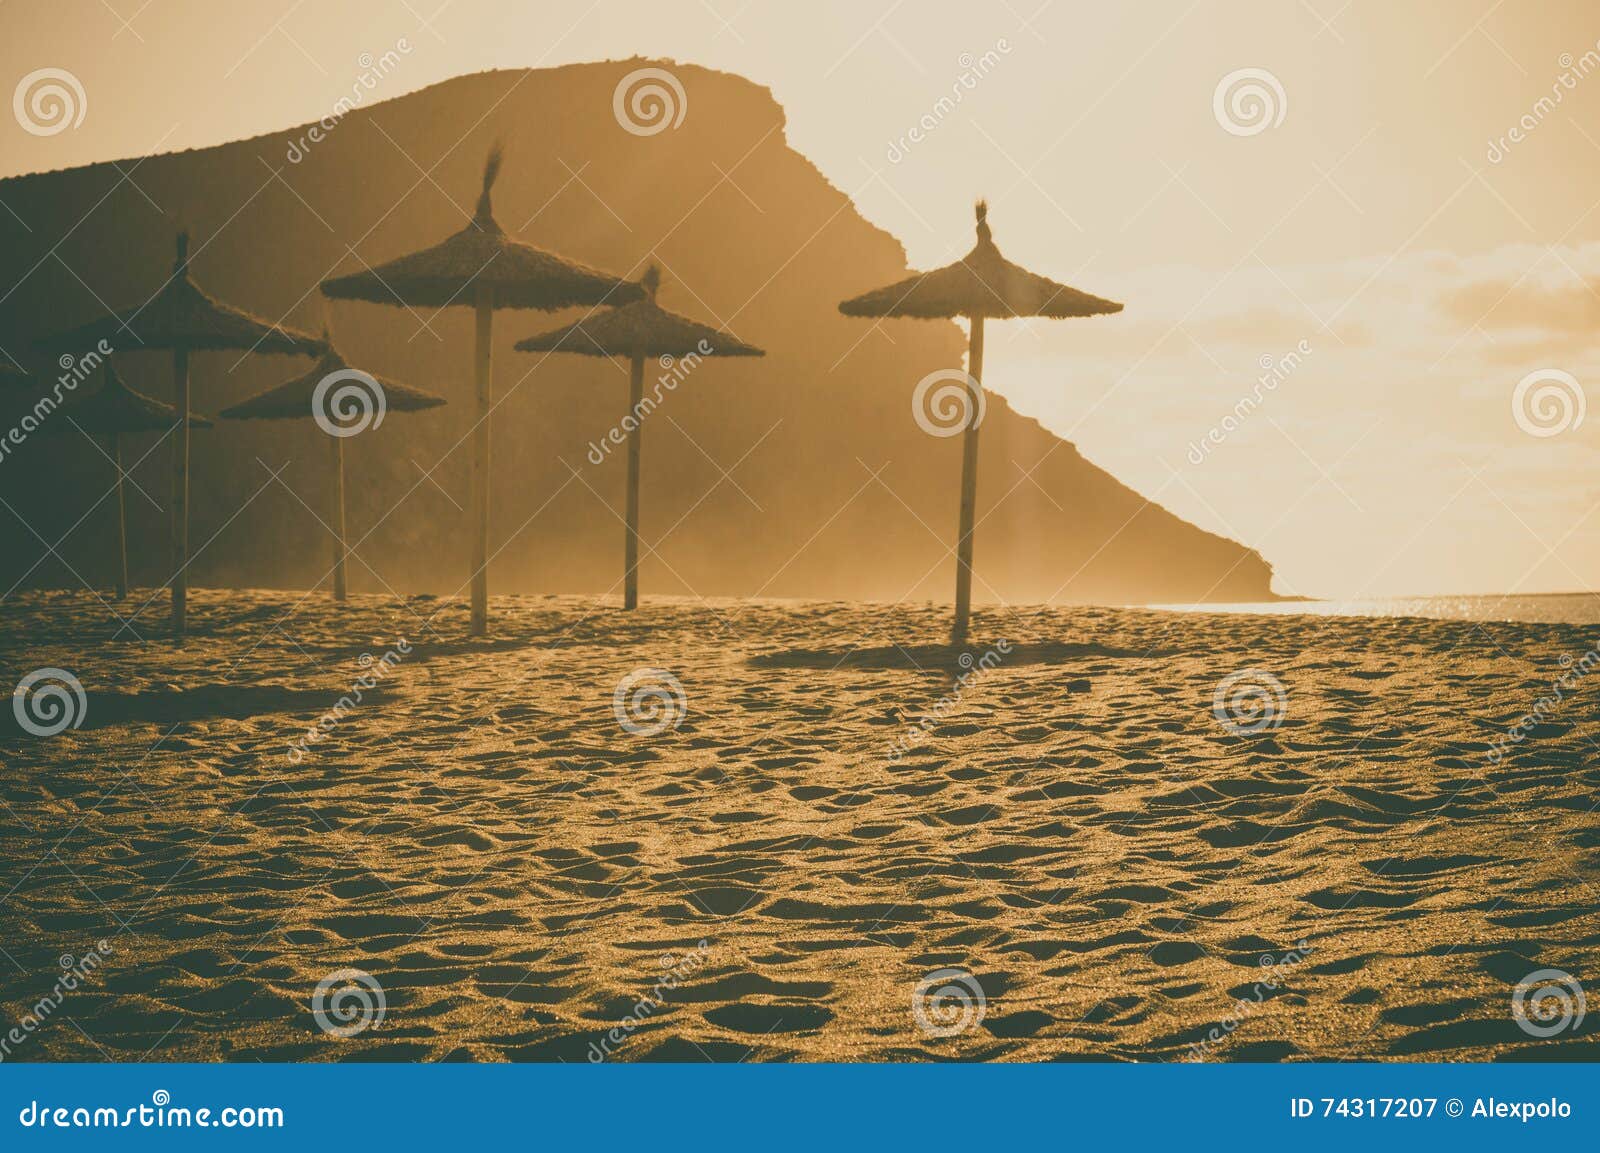 thatch palapa umbrellas at playa la tejita